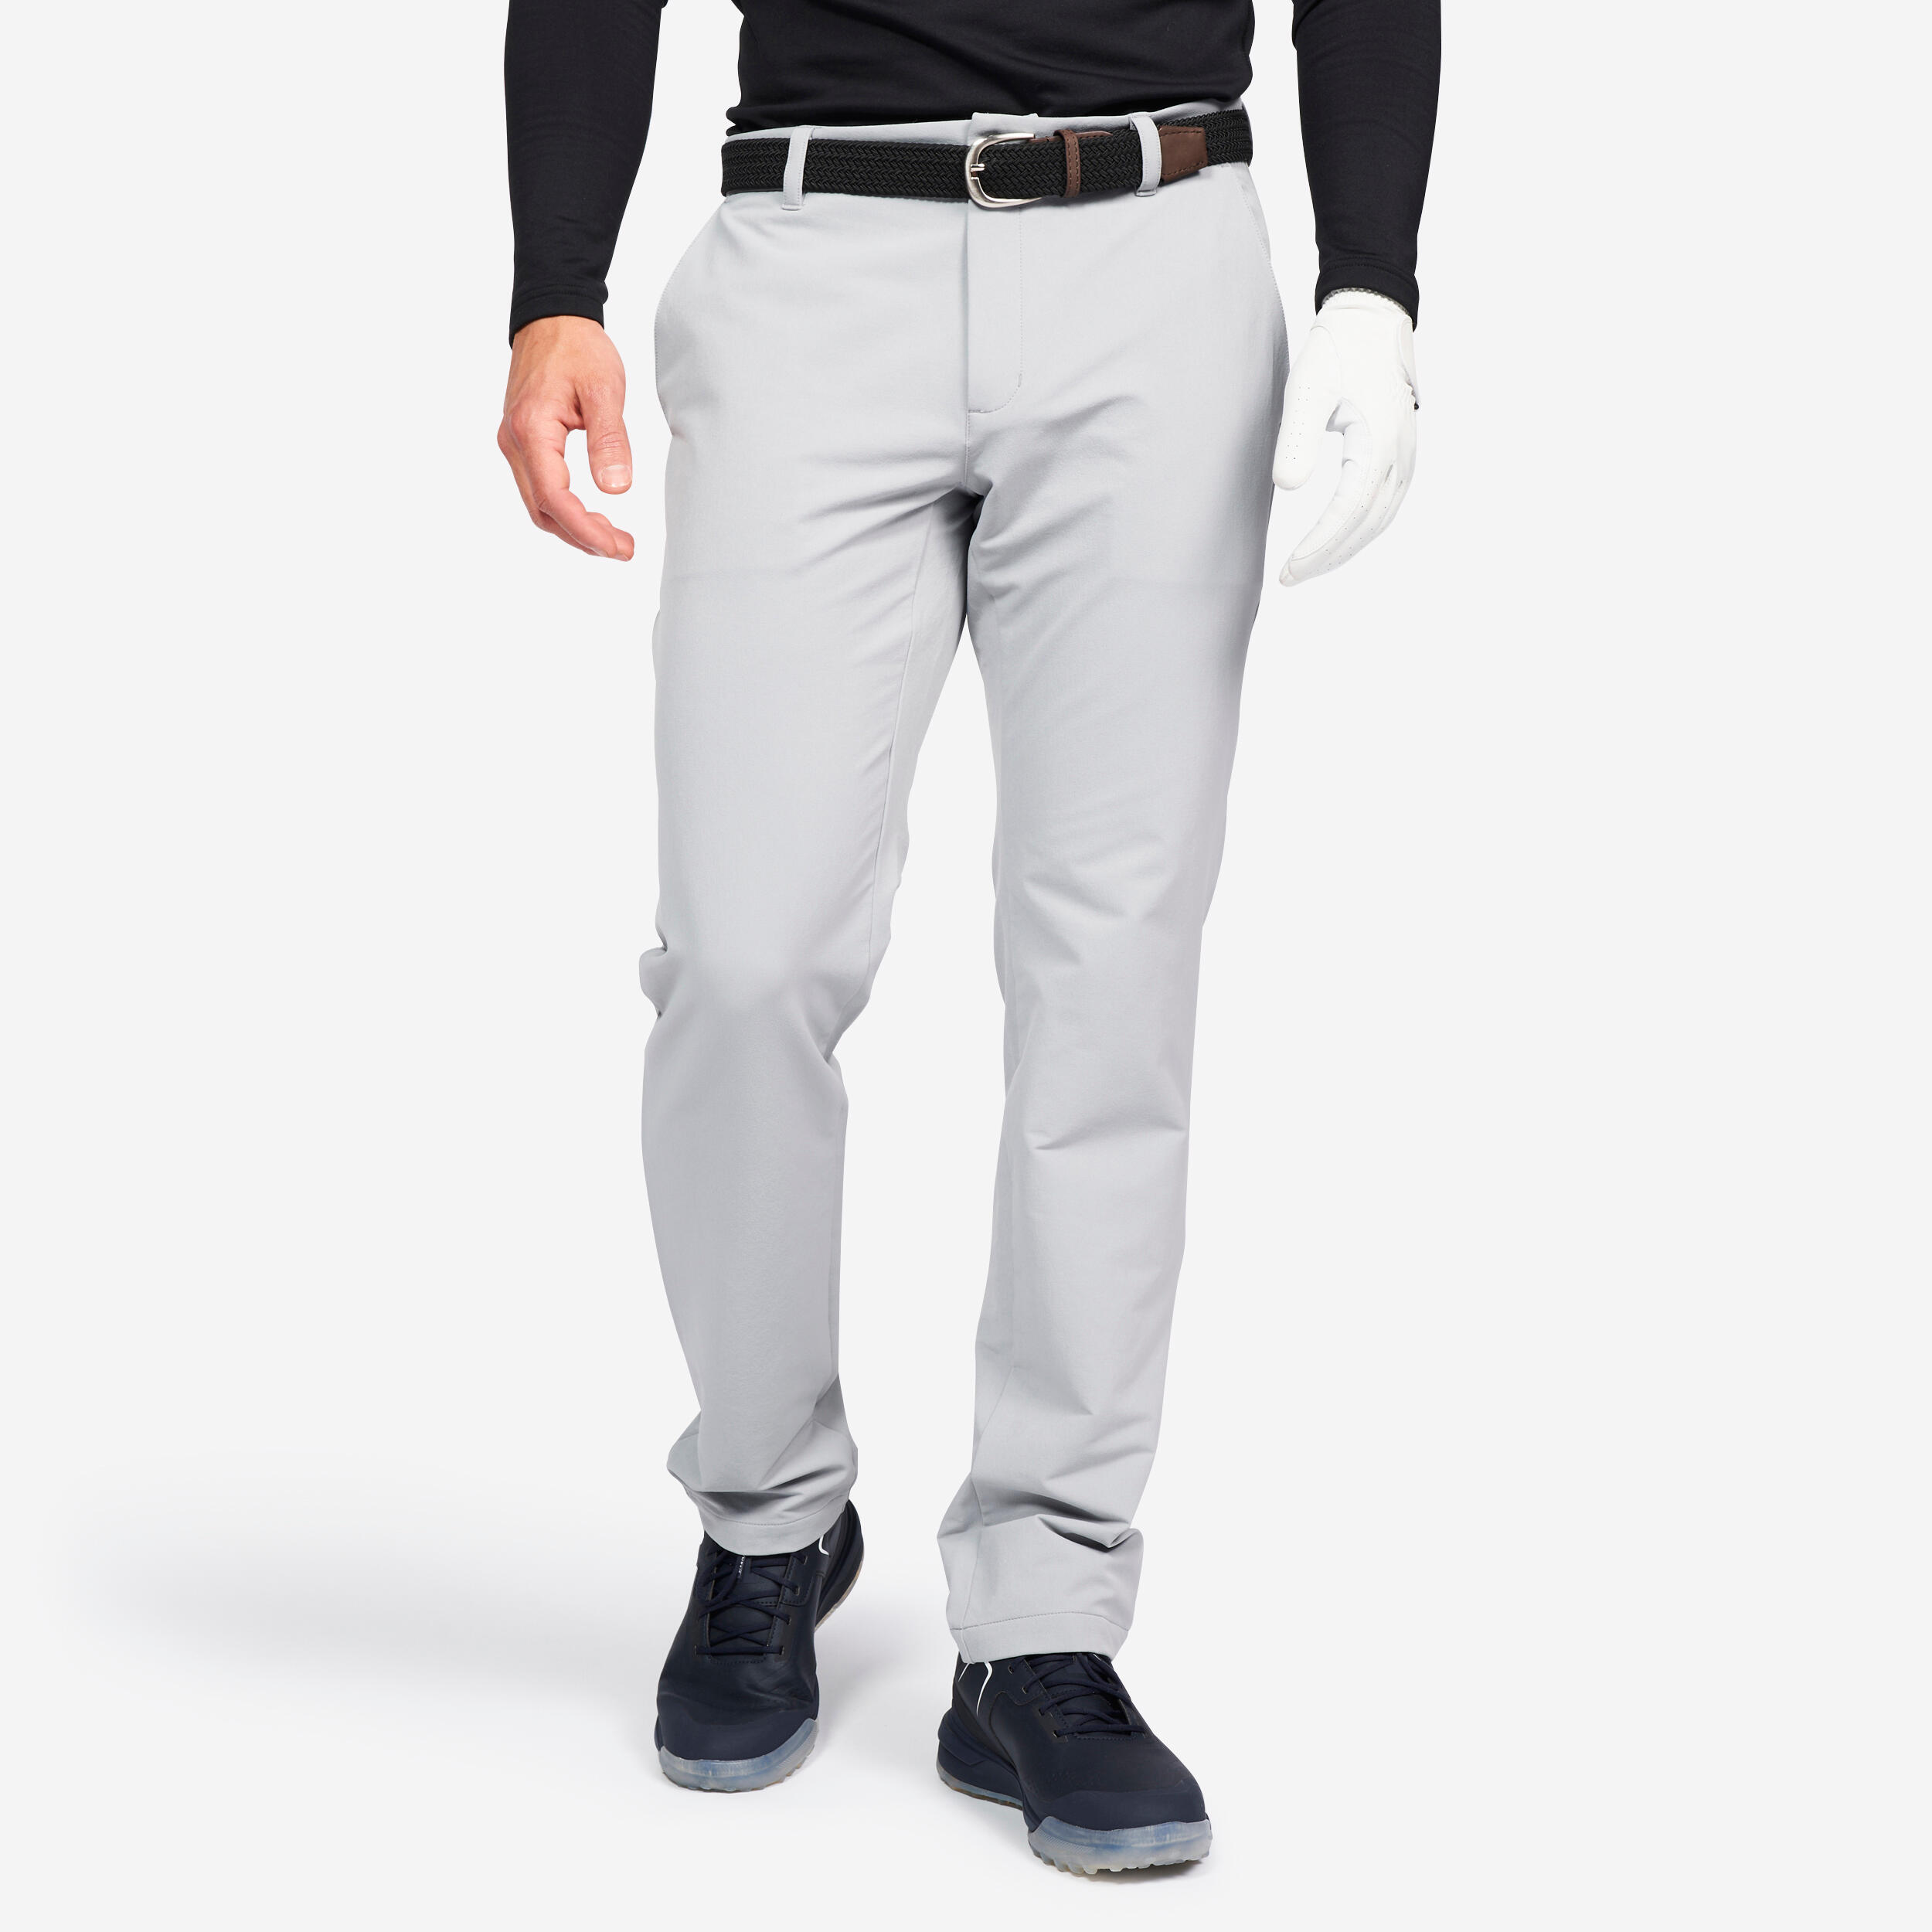 INESIS Men's Golf Winter Trousers - CW500 Grey